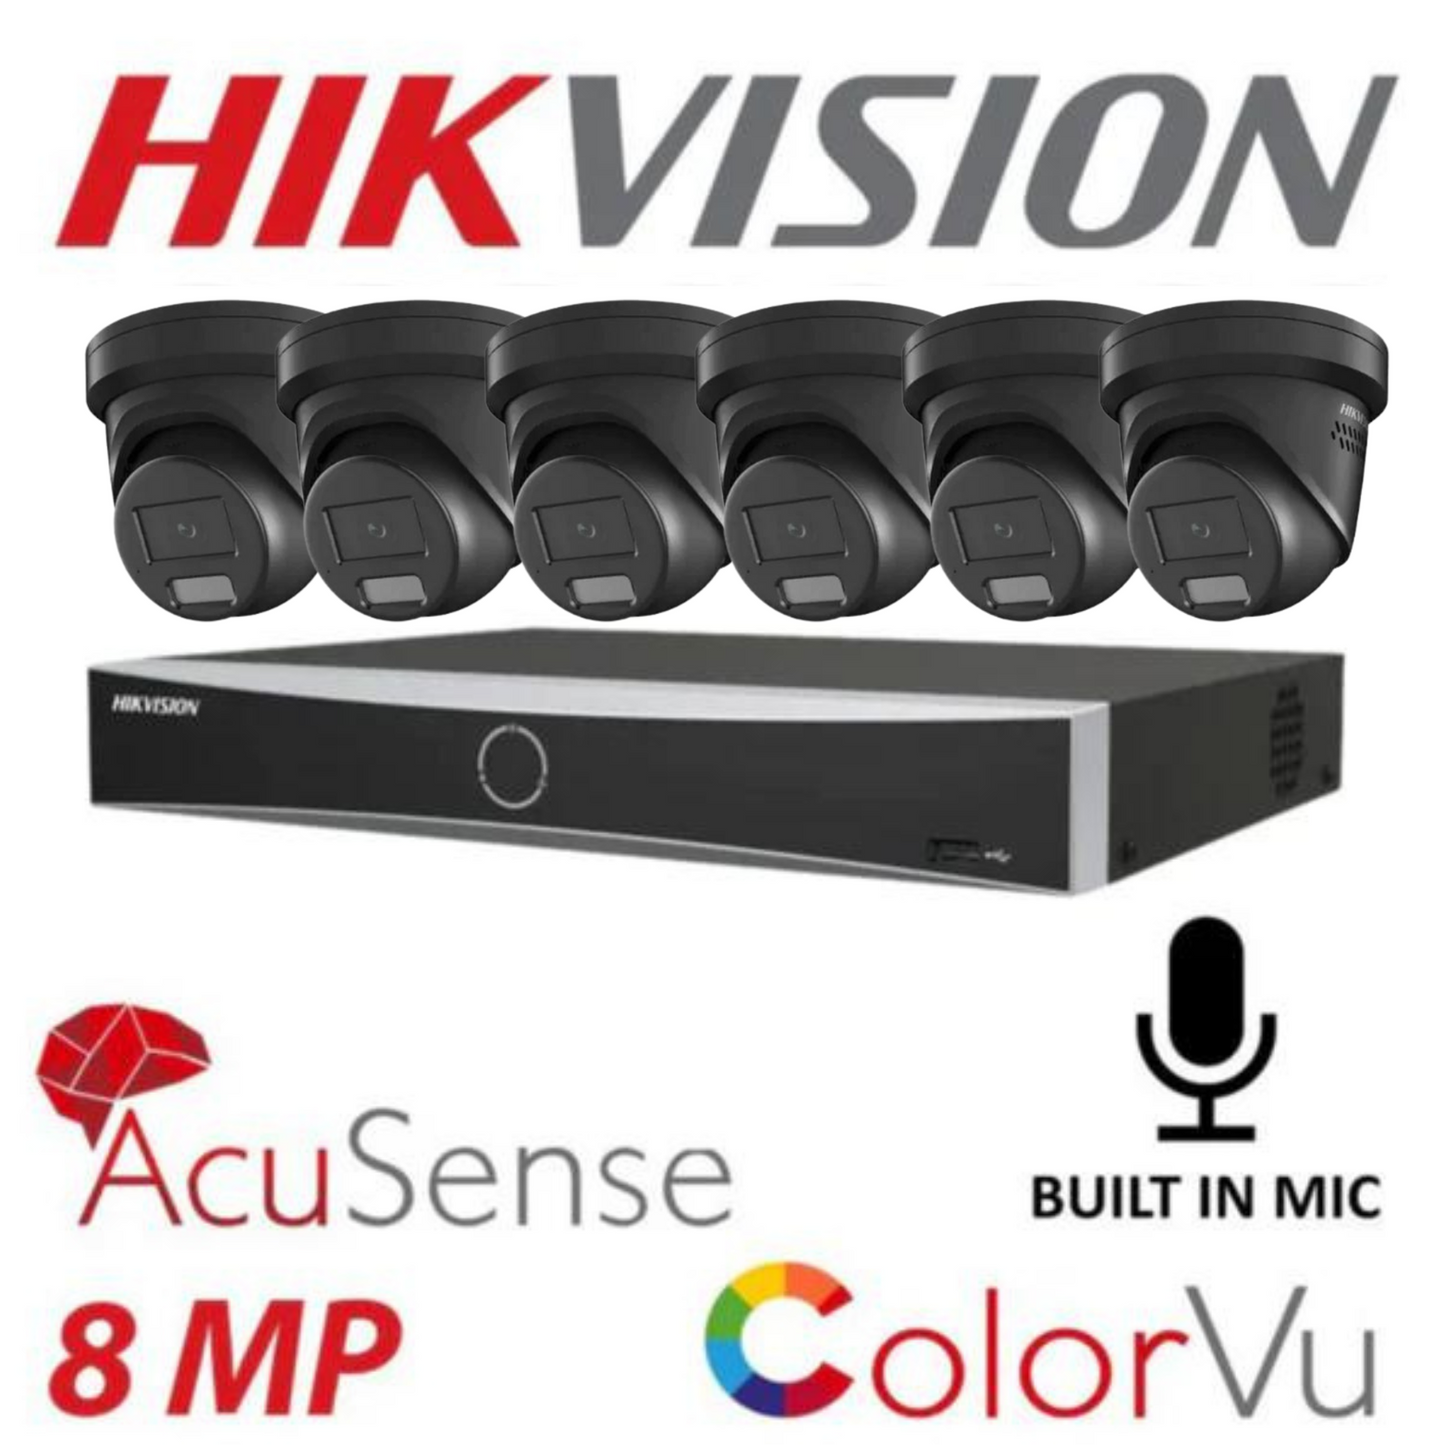 Hikvision CCTV kit, 6 x 8mp Smart Hybrid Colorvu Acusense IP POE and Audio cameras, 1 x 8 Channel POE NVR